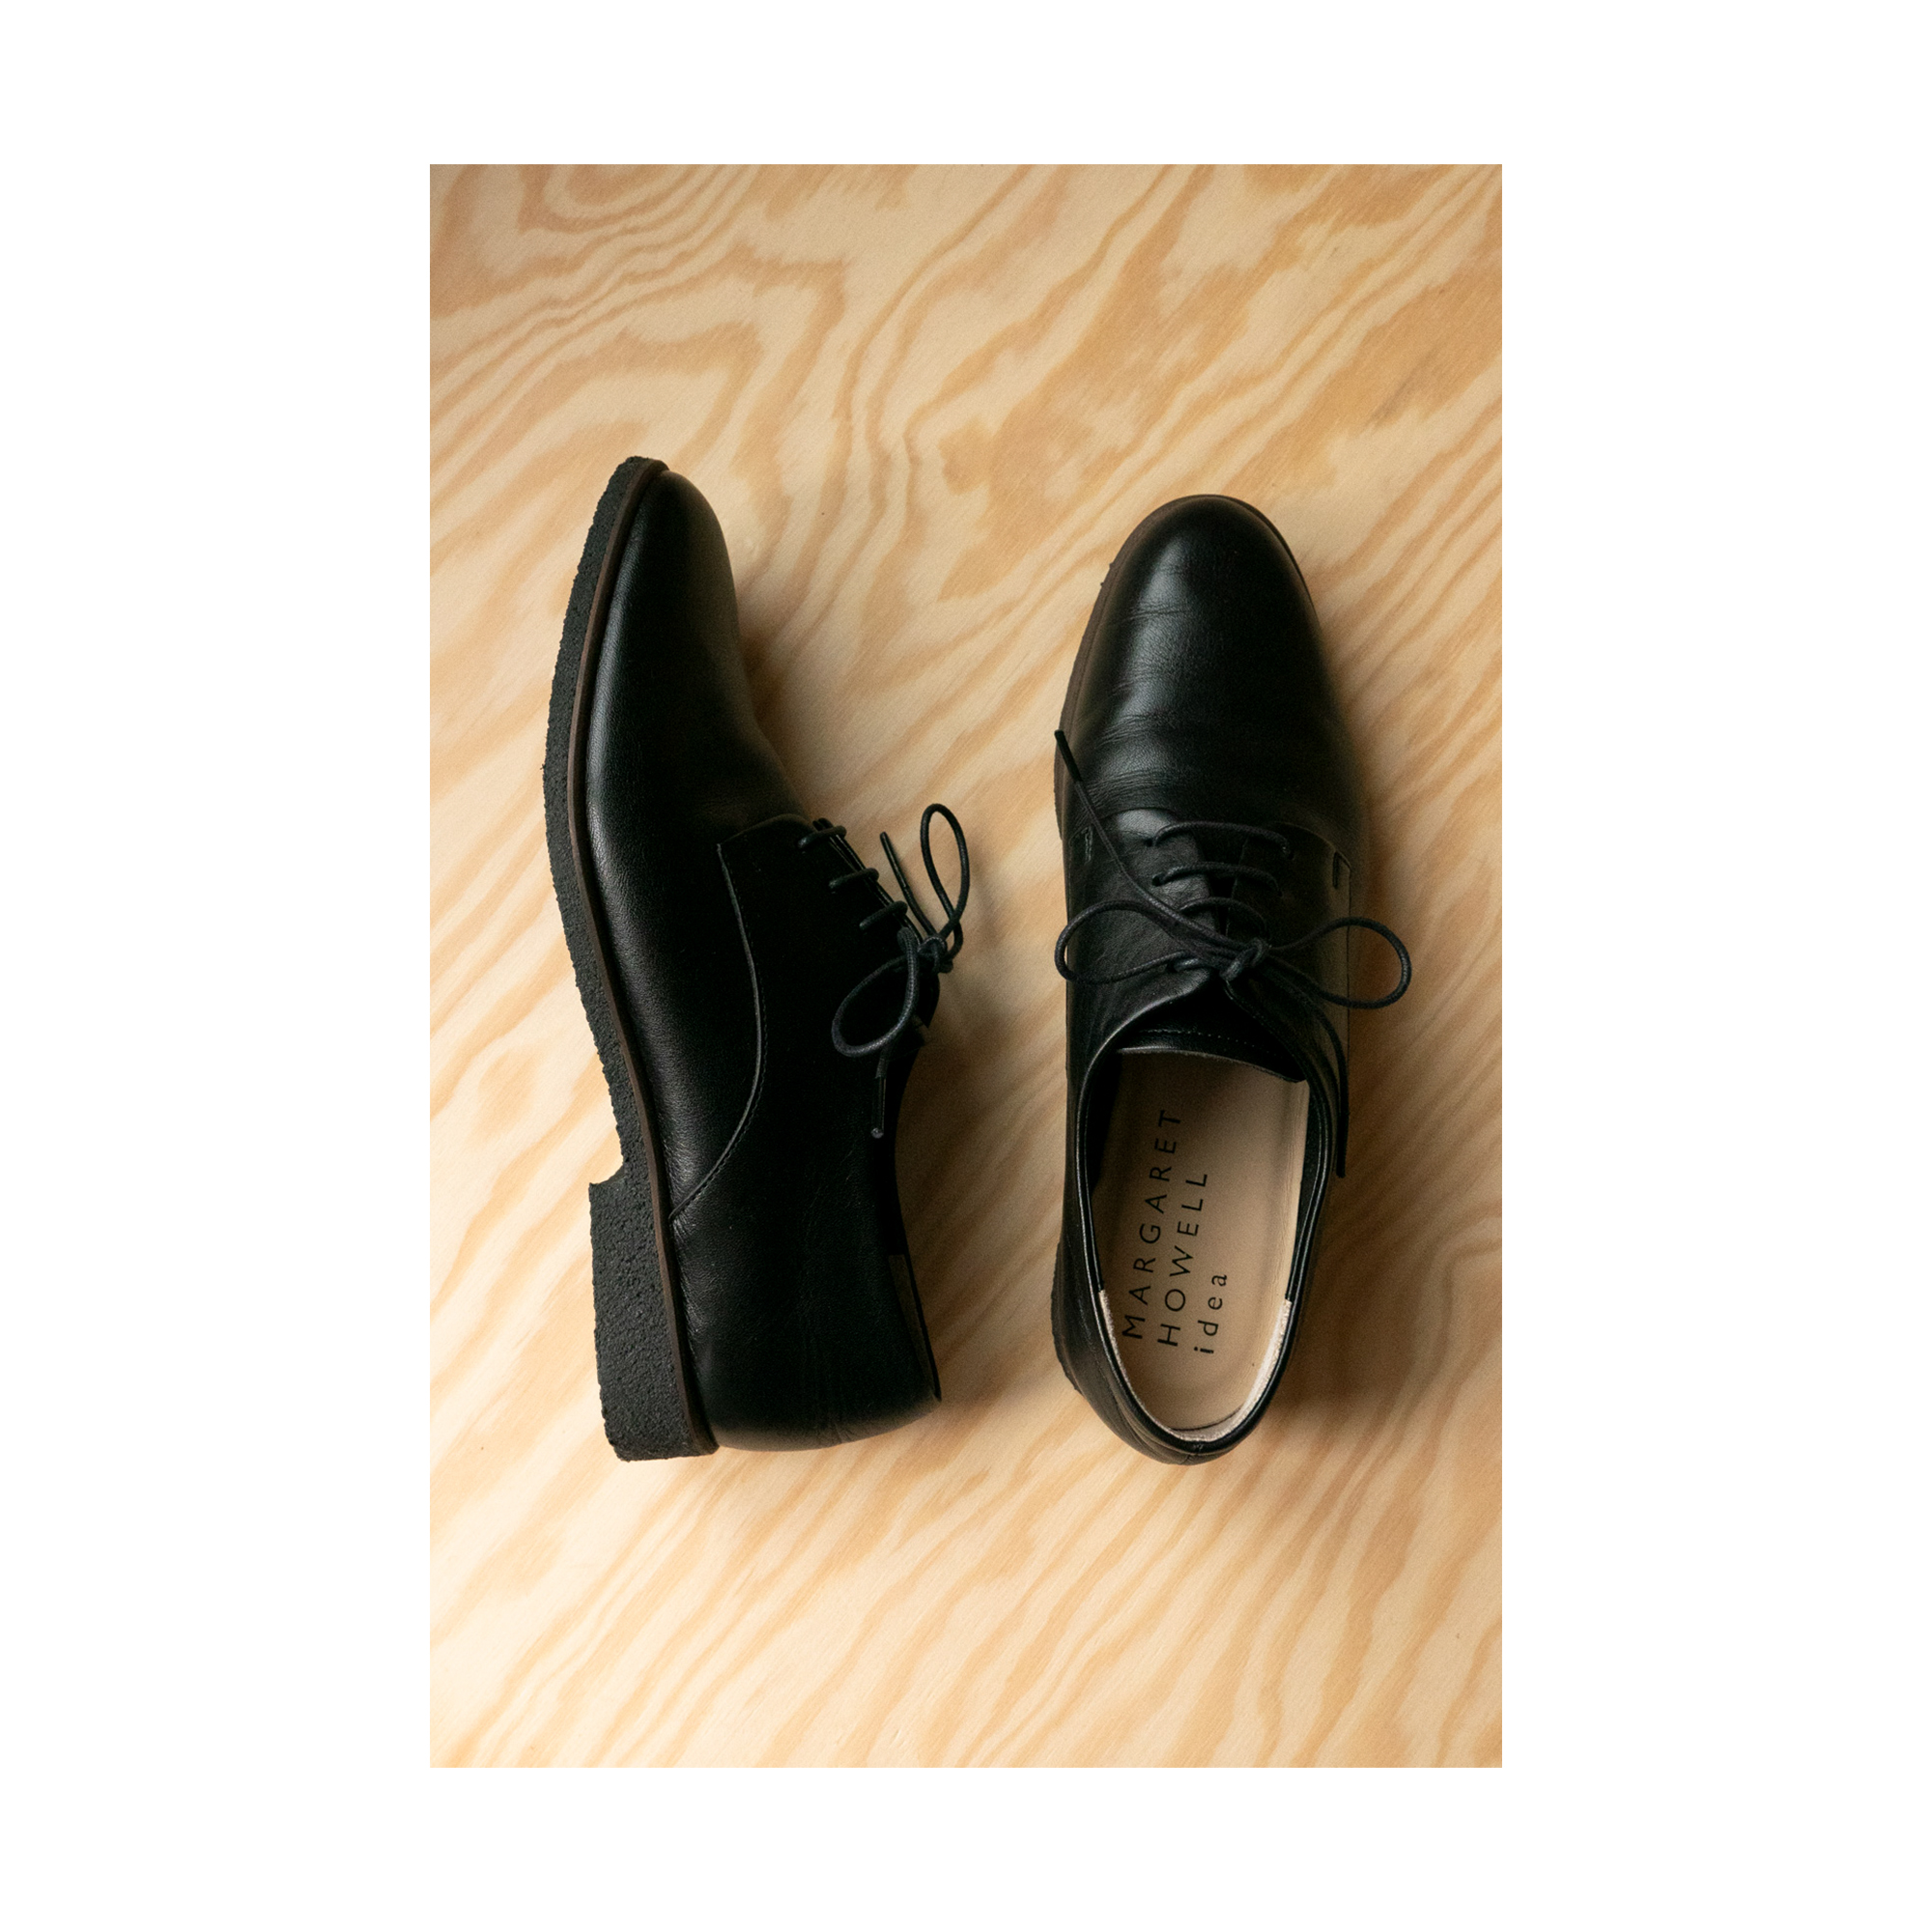 MARGARET HOWELL - Leather Dress Shoes (Black)